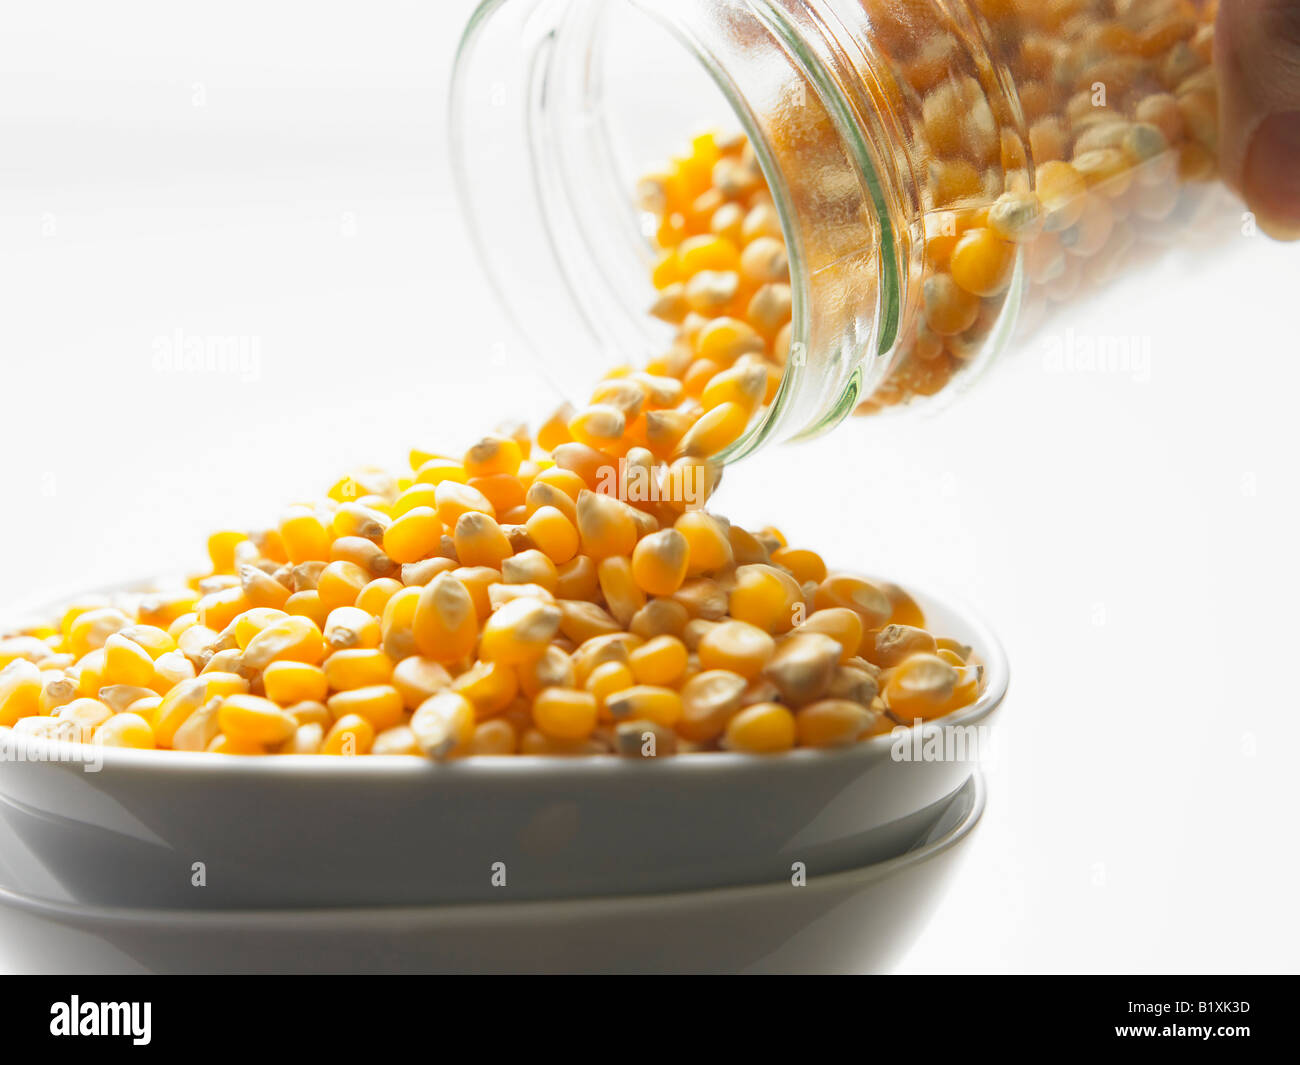 jar pouring out popcorn kernels Stock Photo - Alamy